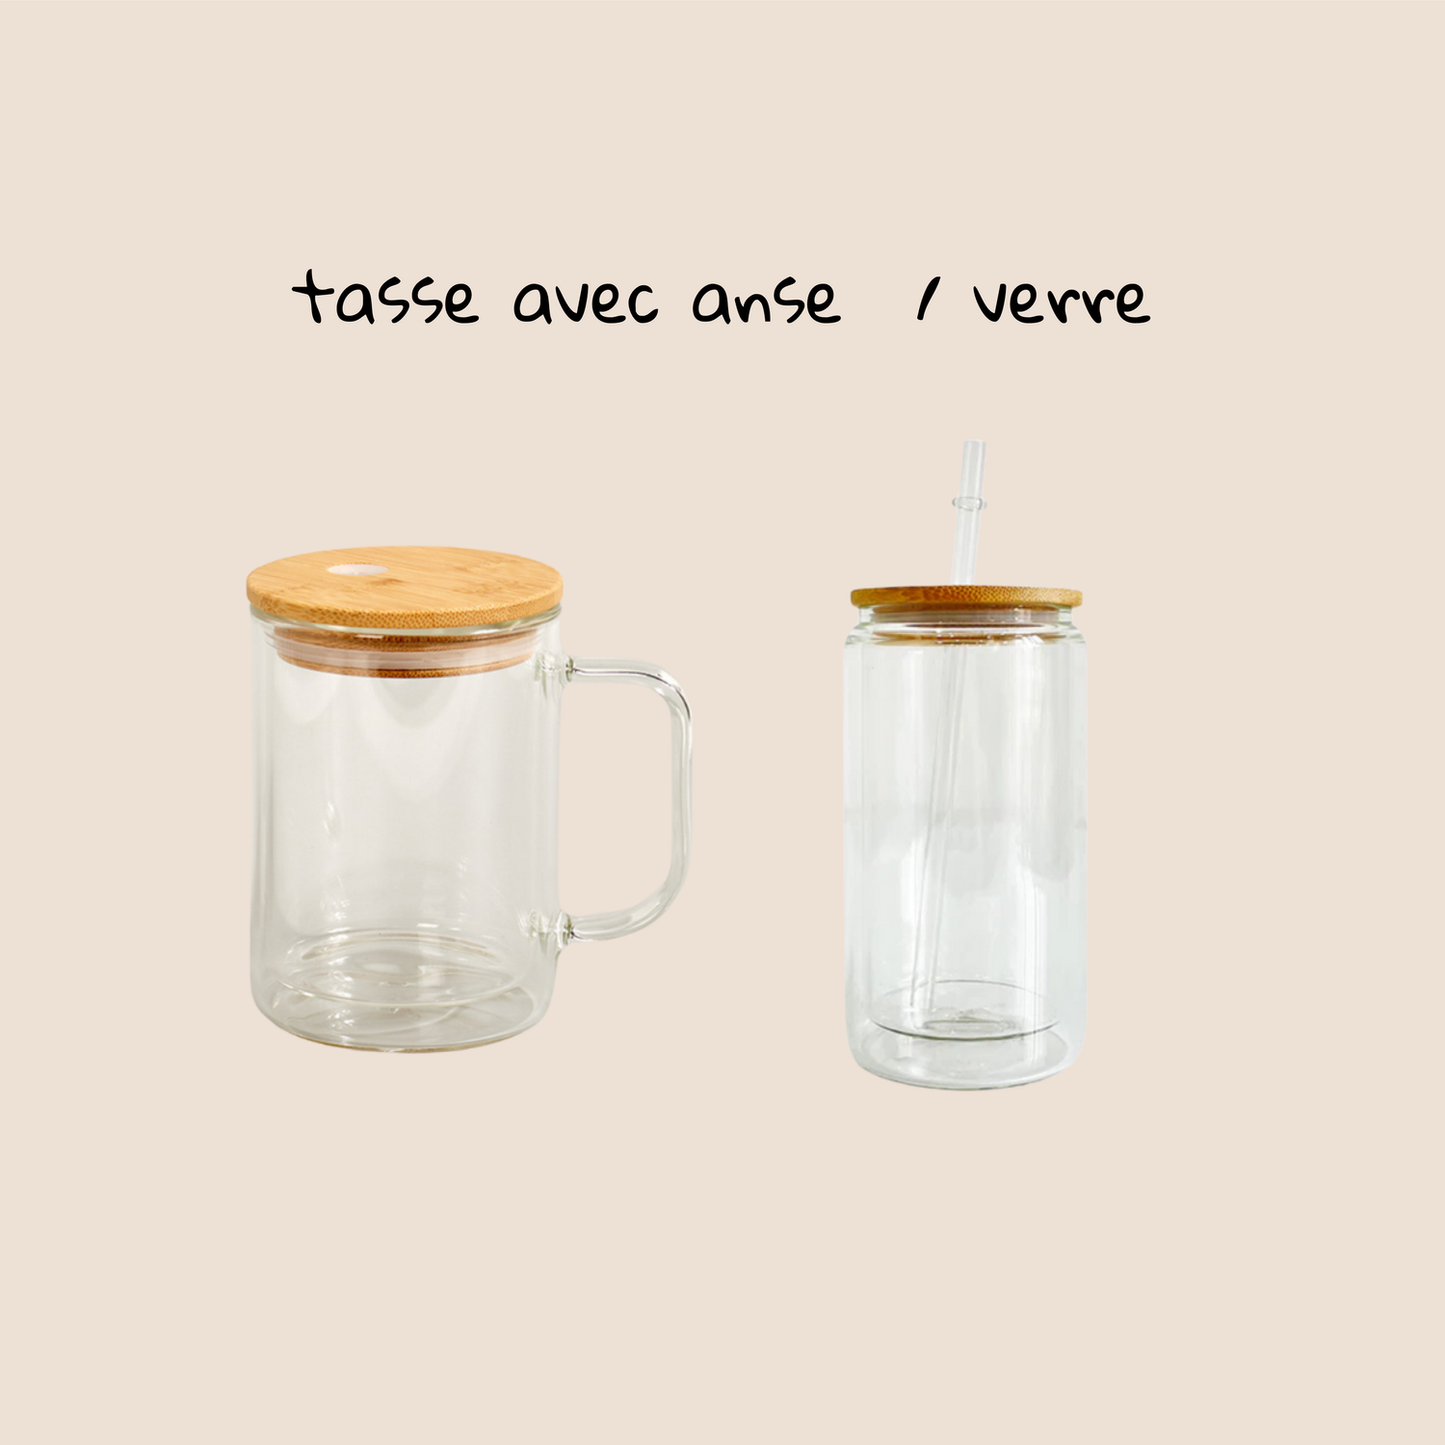 Verre - Coffee is always a good idea